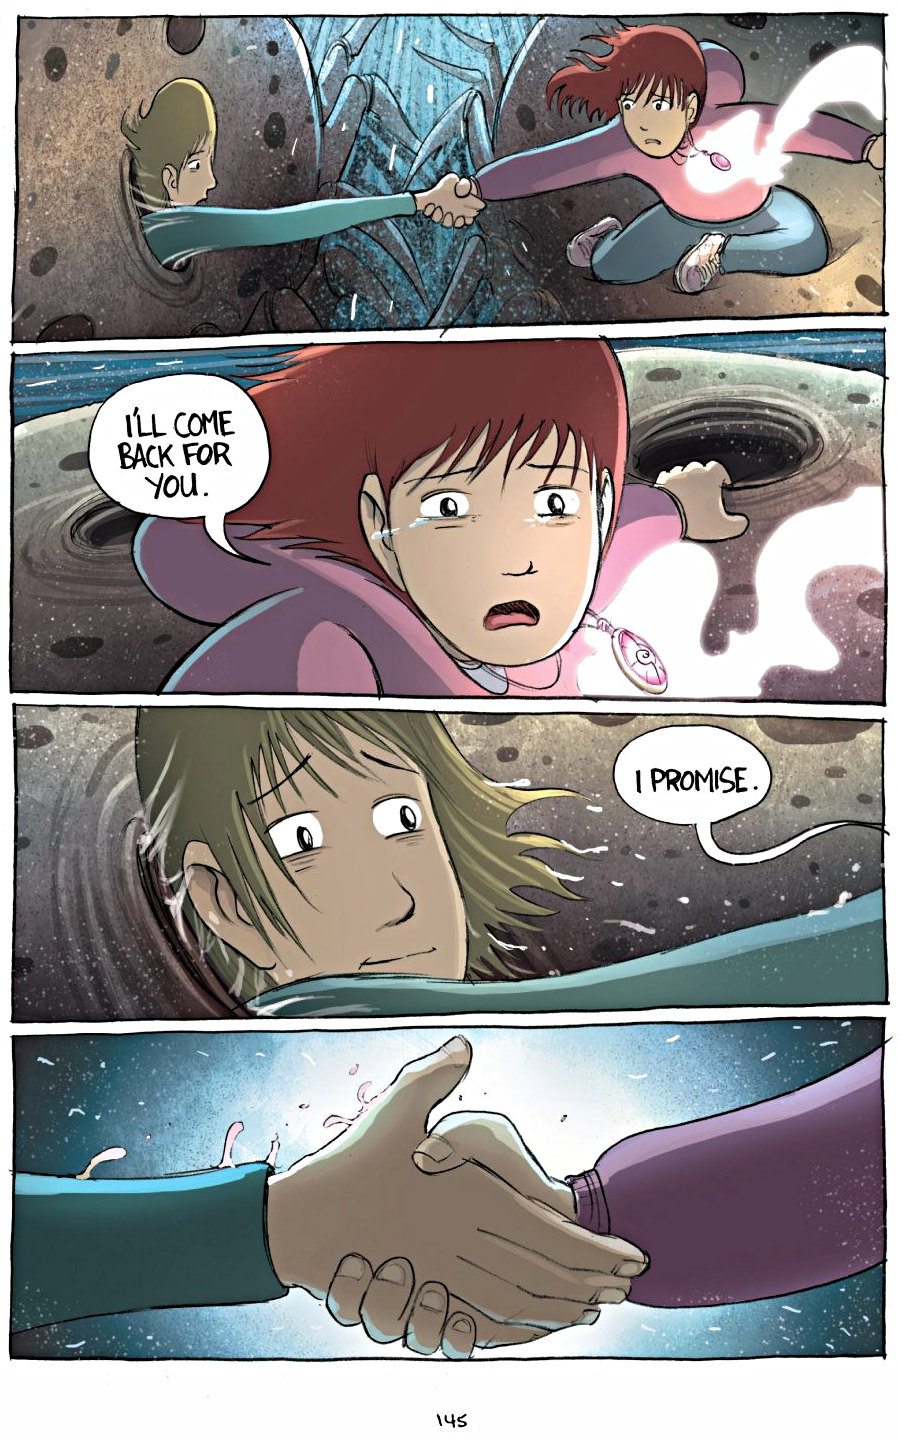 page 145 of amulet 1 stonekeeper graphic novel by kazu kibuishi - read online